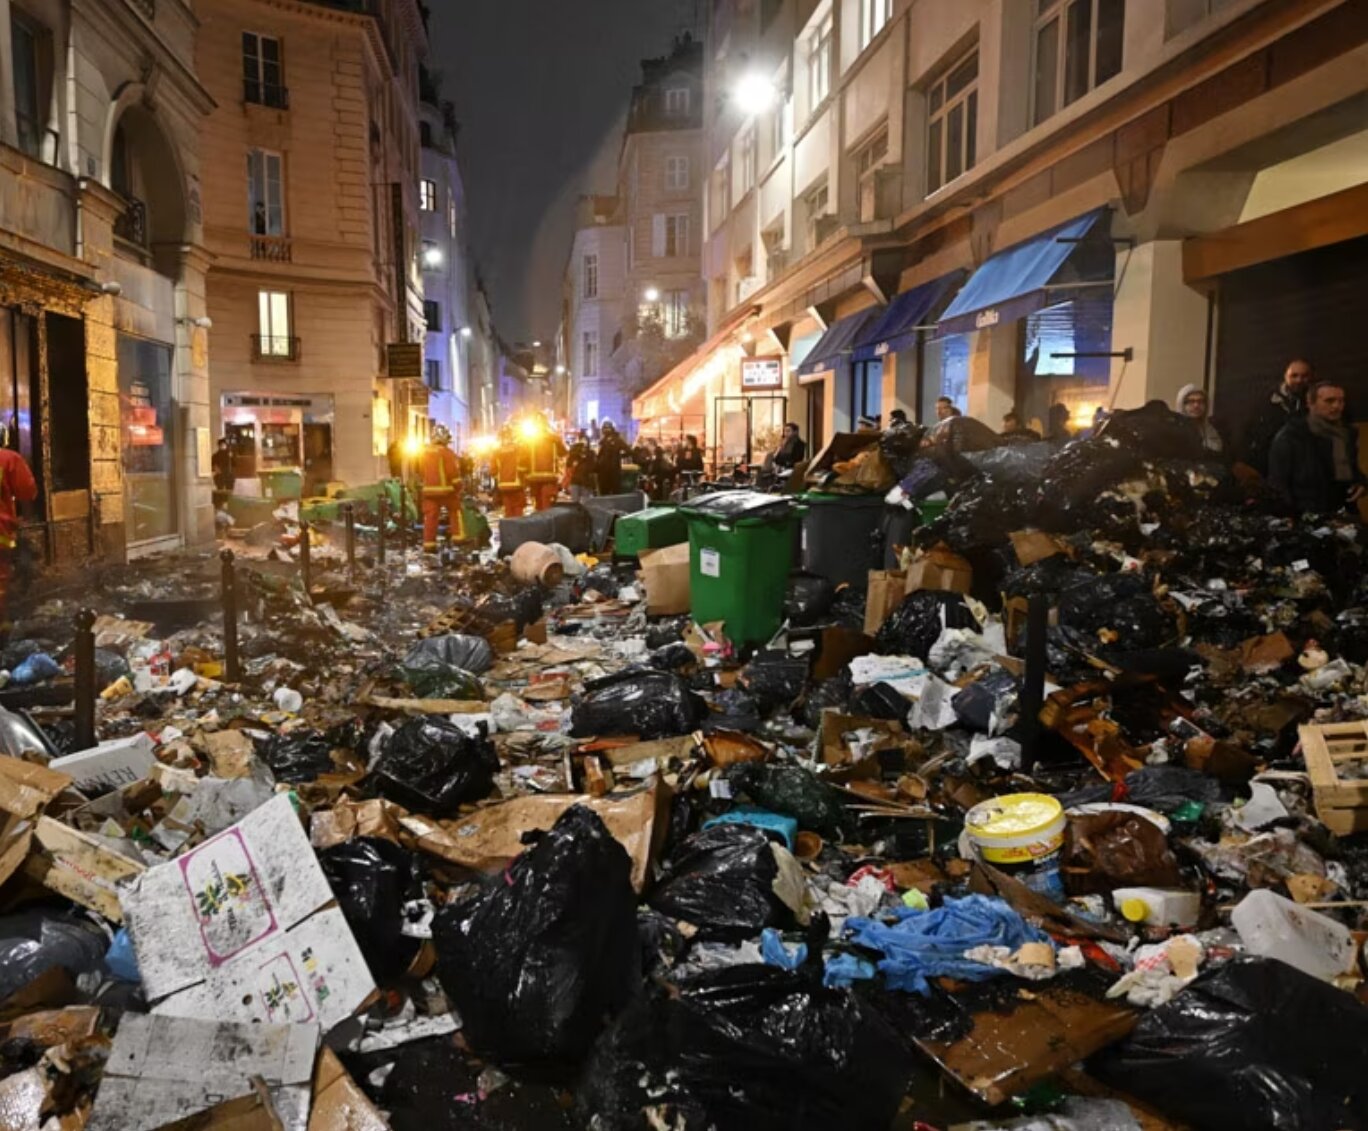 a-street-in-paris-after-weeks-of-garbage-collector-strikes-v0-16rkh65n3qpa1_proc.jpg